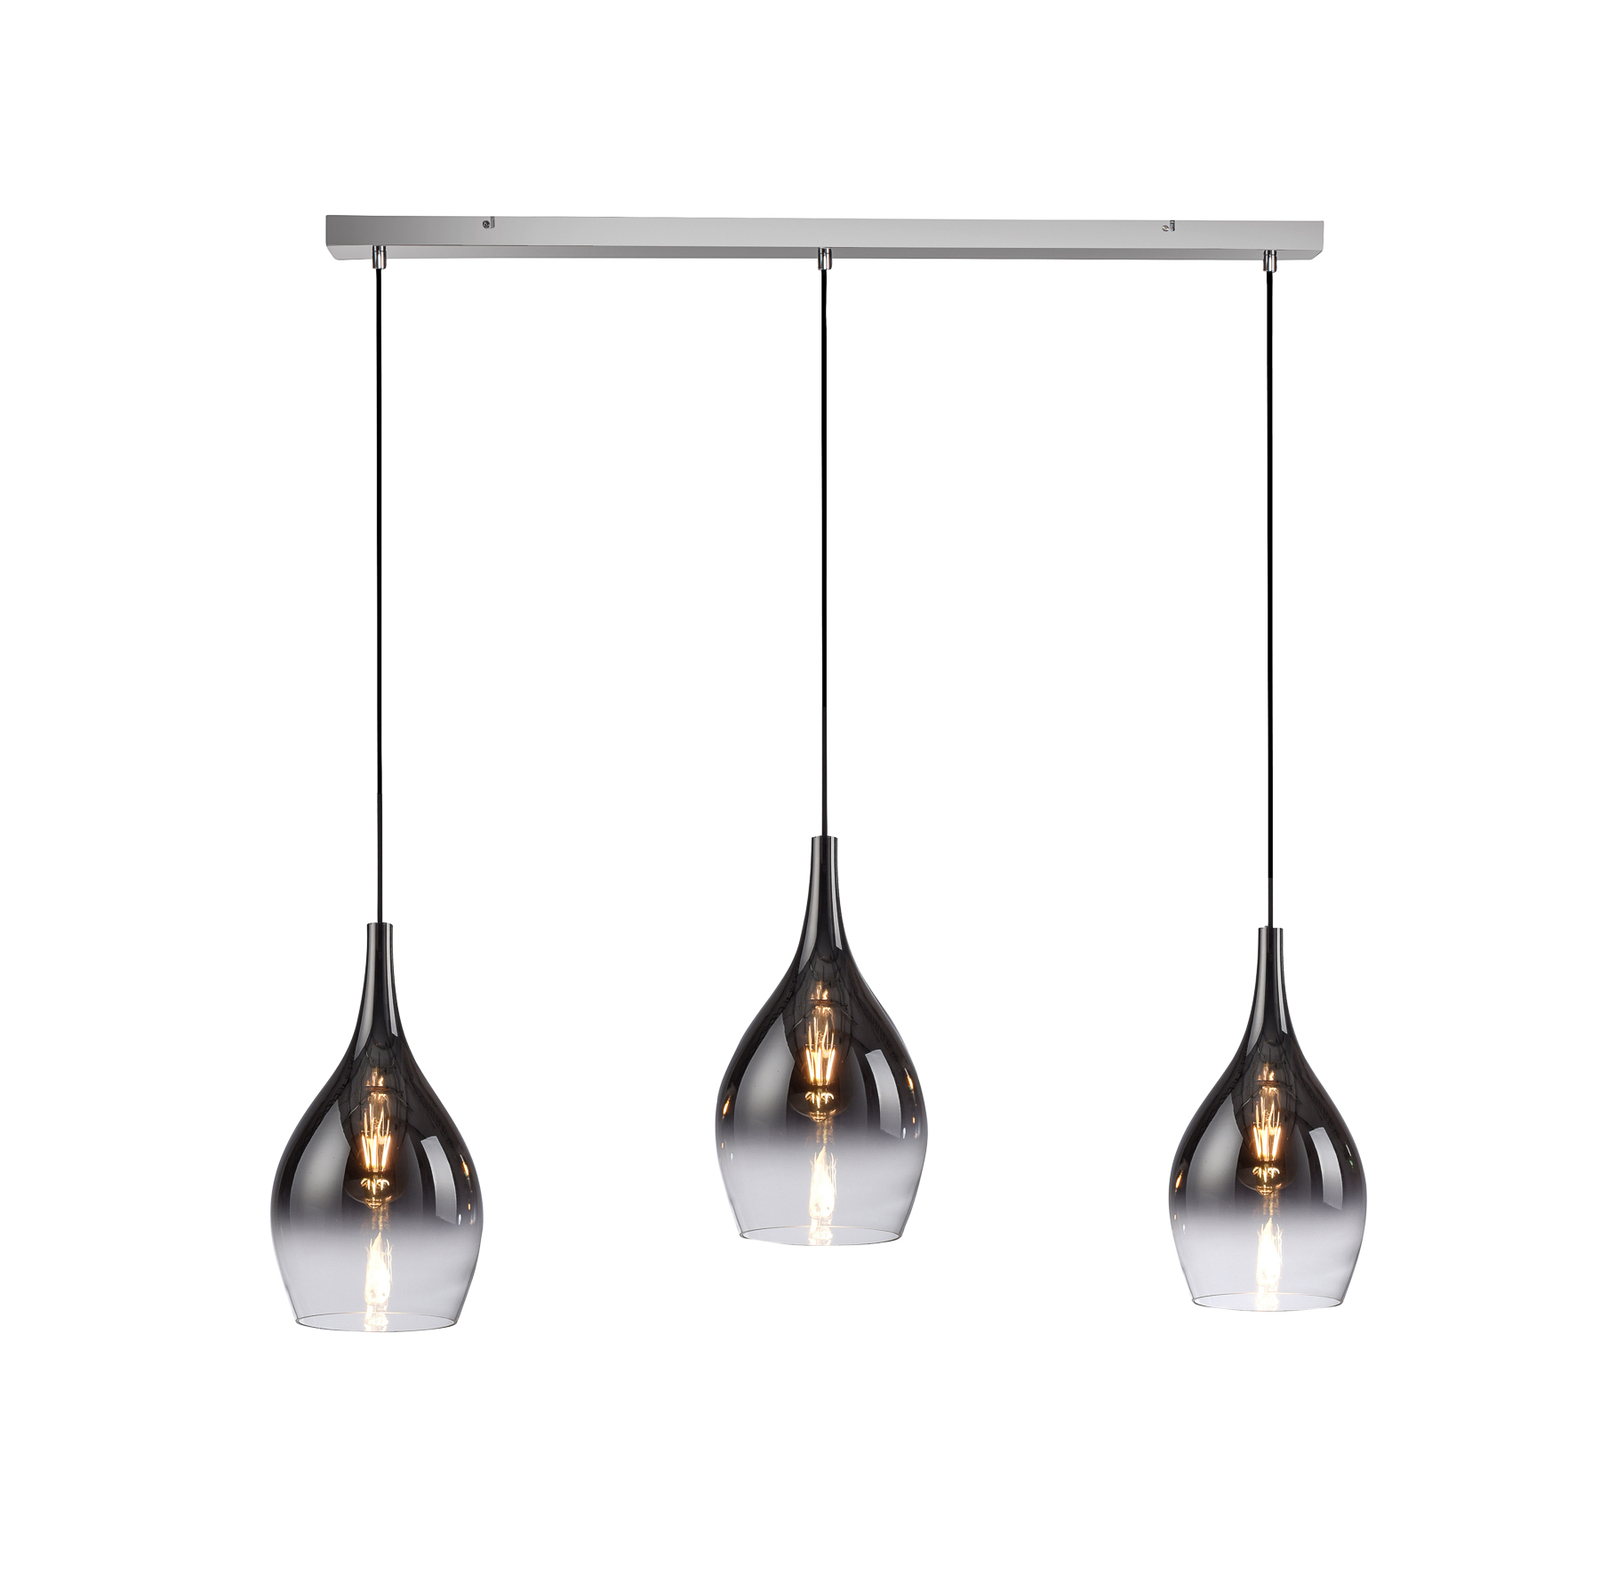 Pilua pendant light, three-bulb, angular canopy